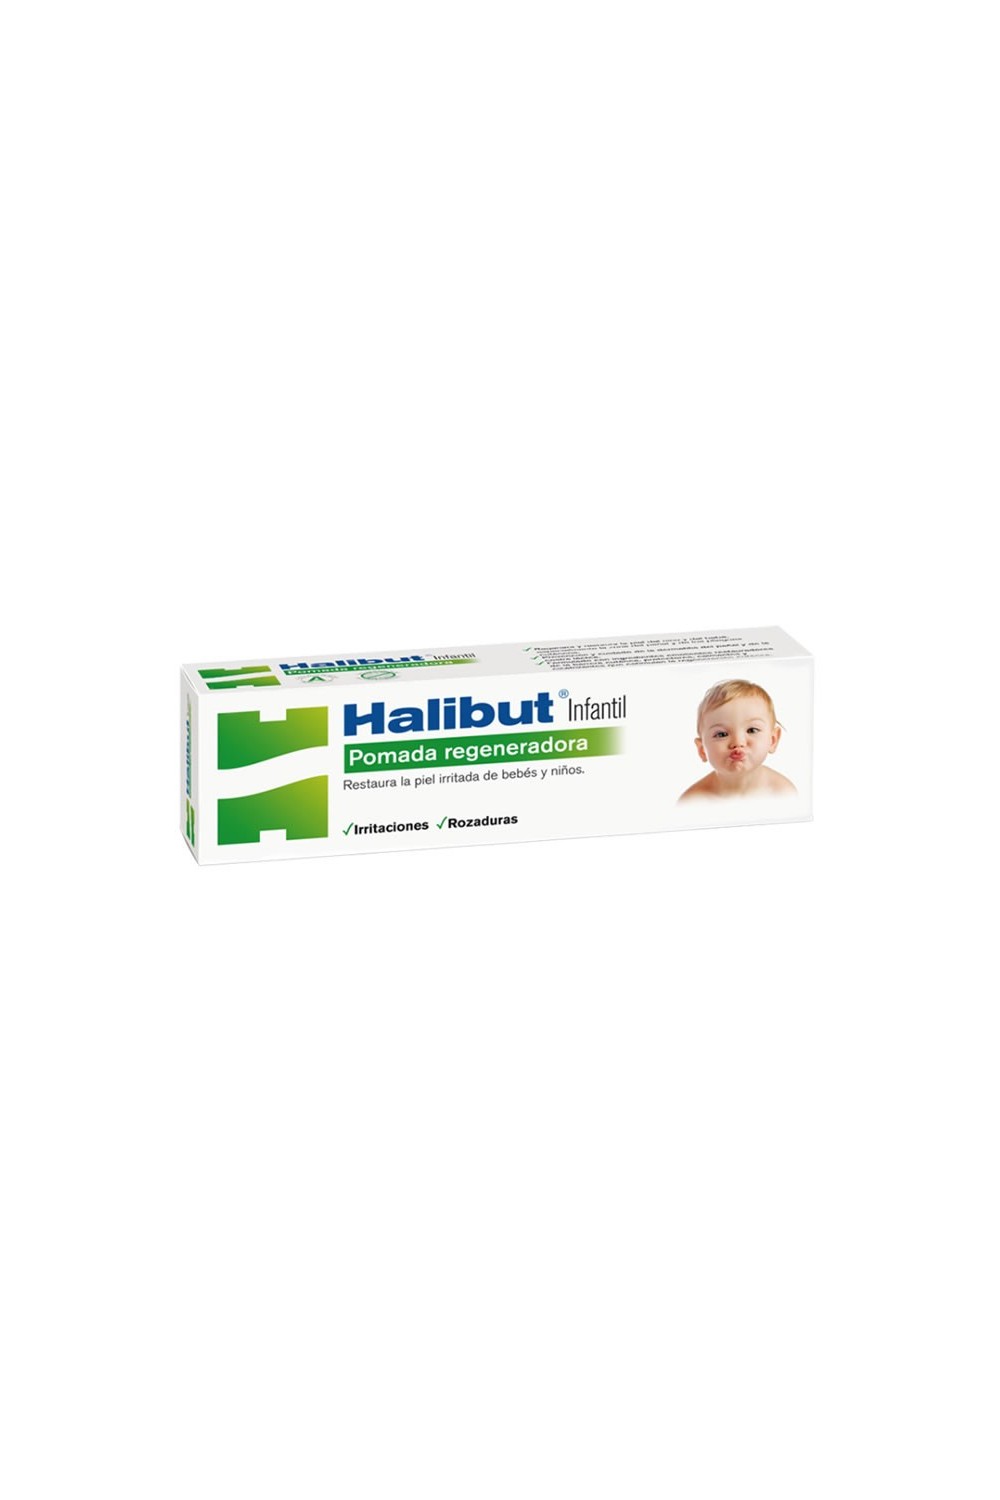 Halibut Children’s Regenerating Ointment 45g